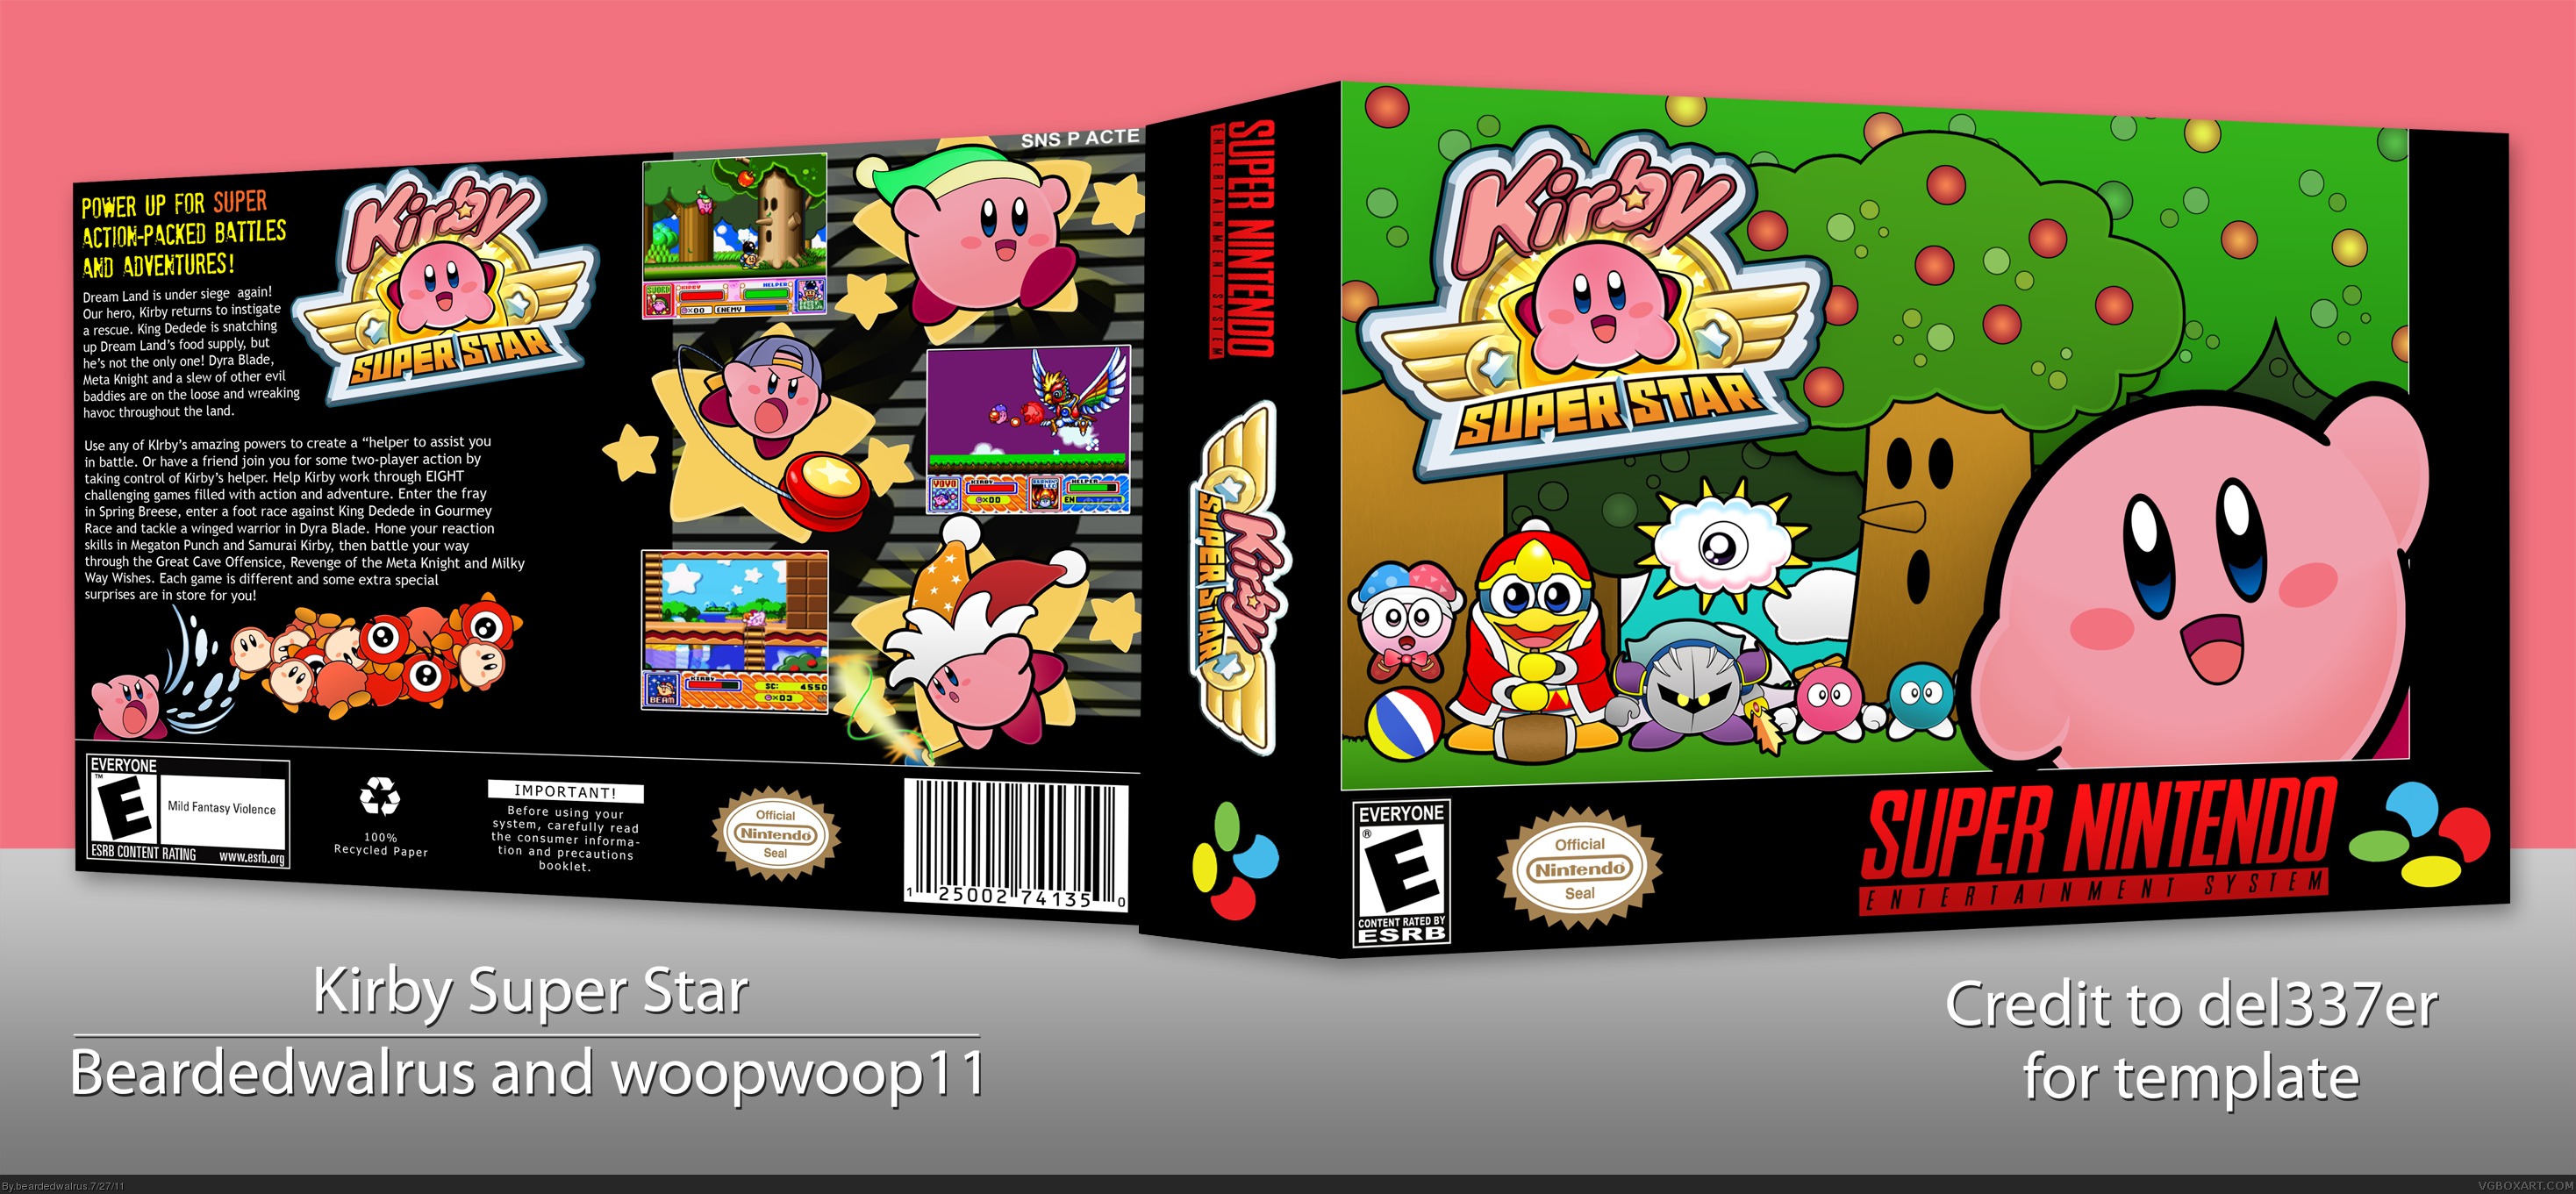 Kirby Super Star box cover